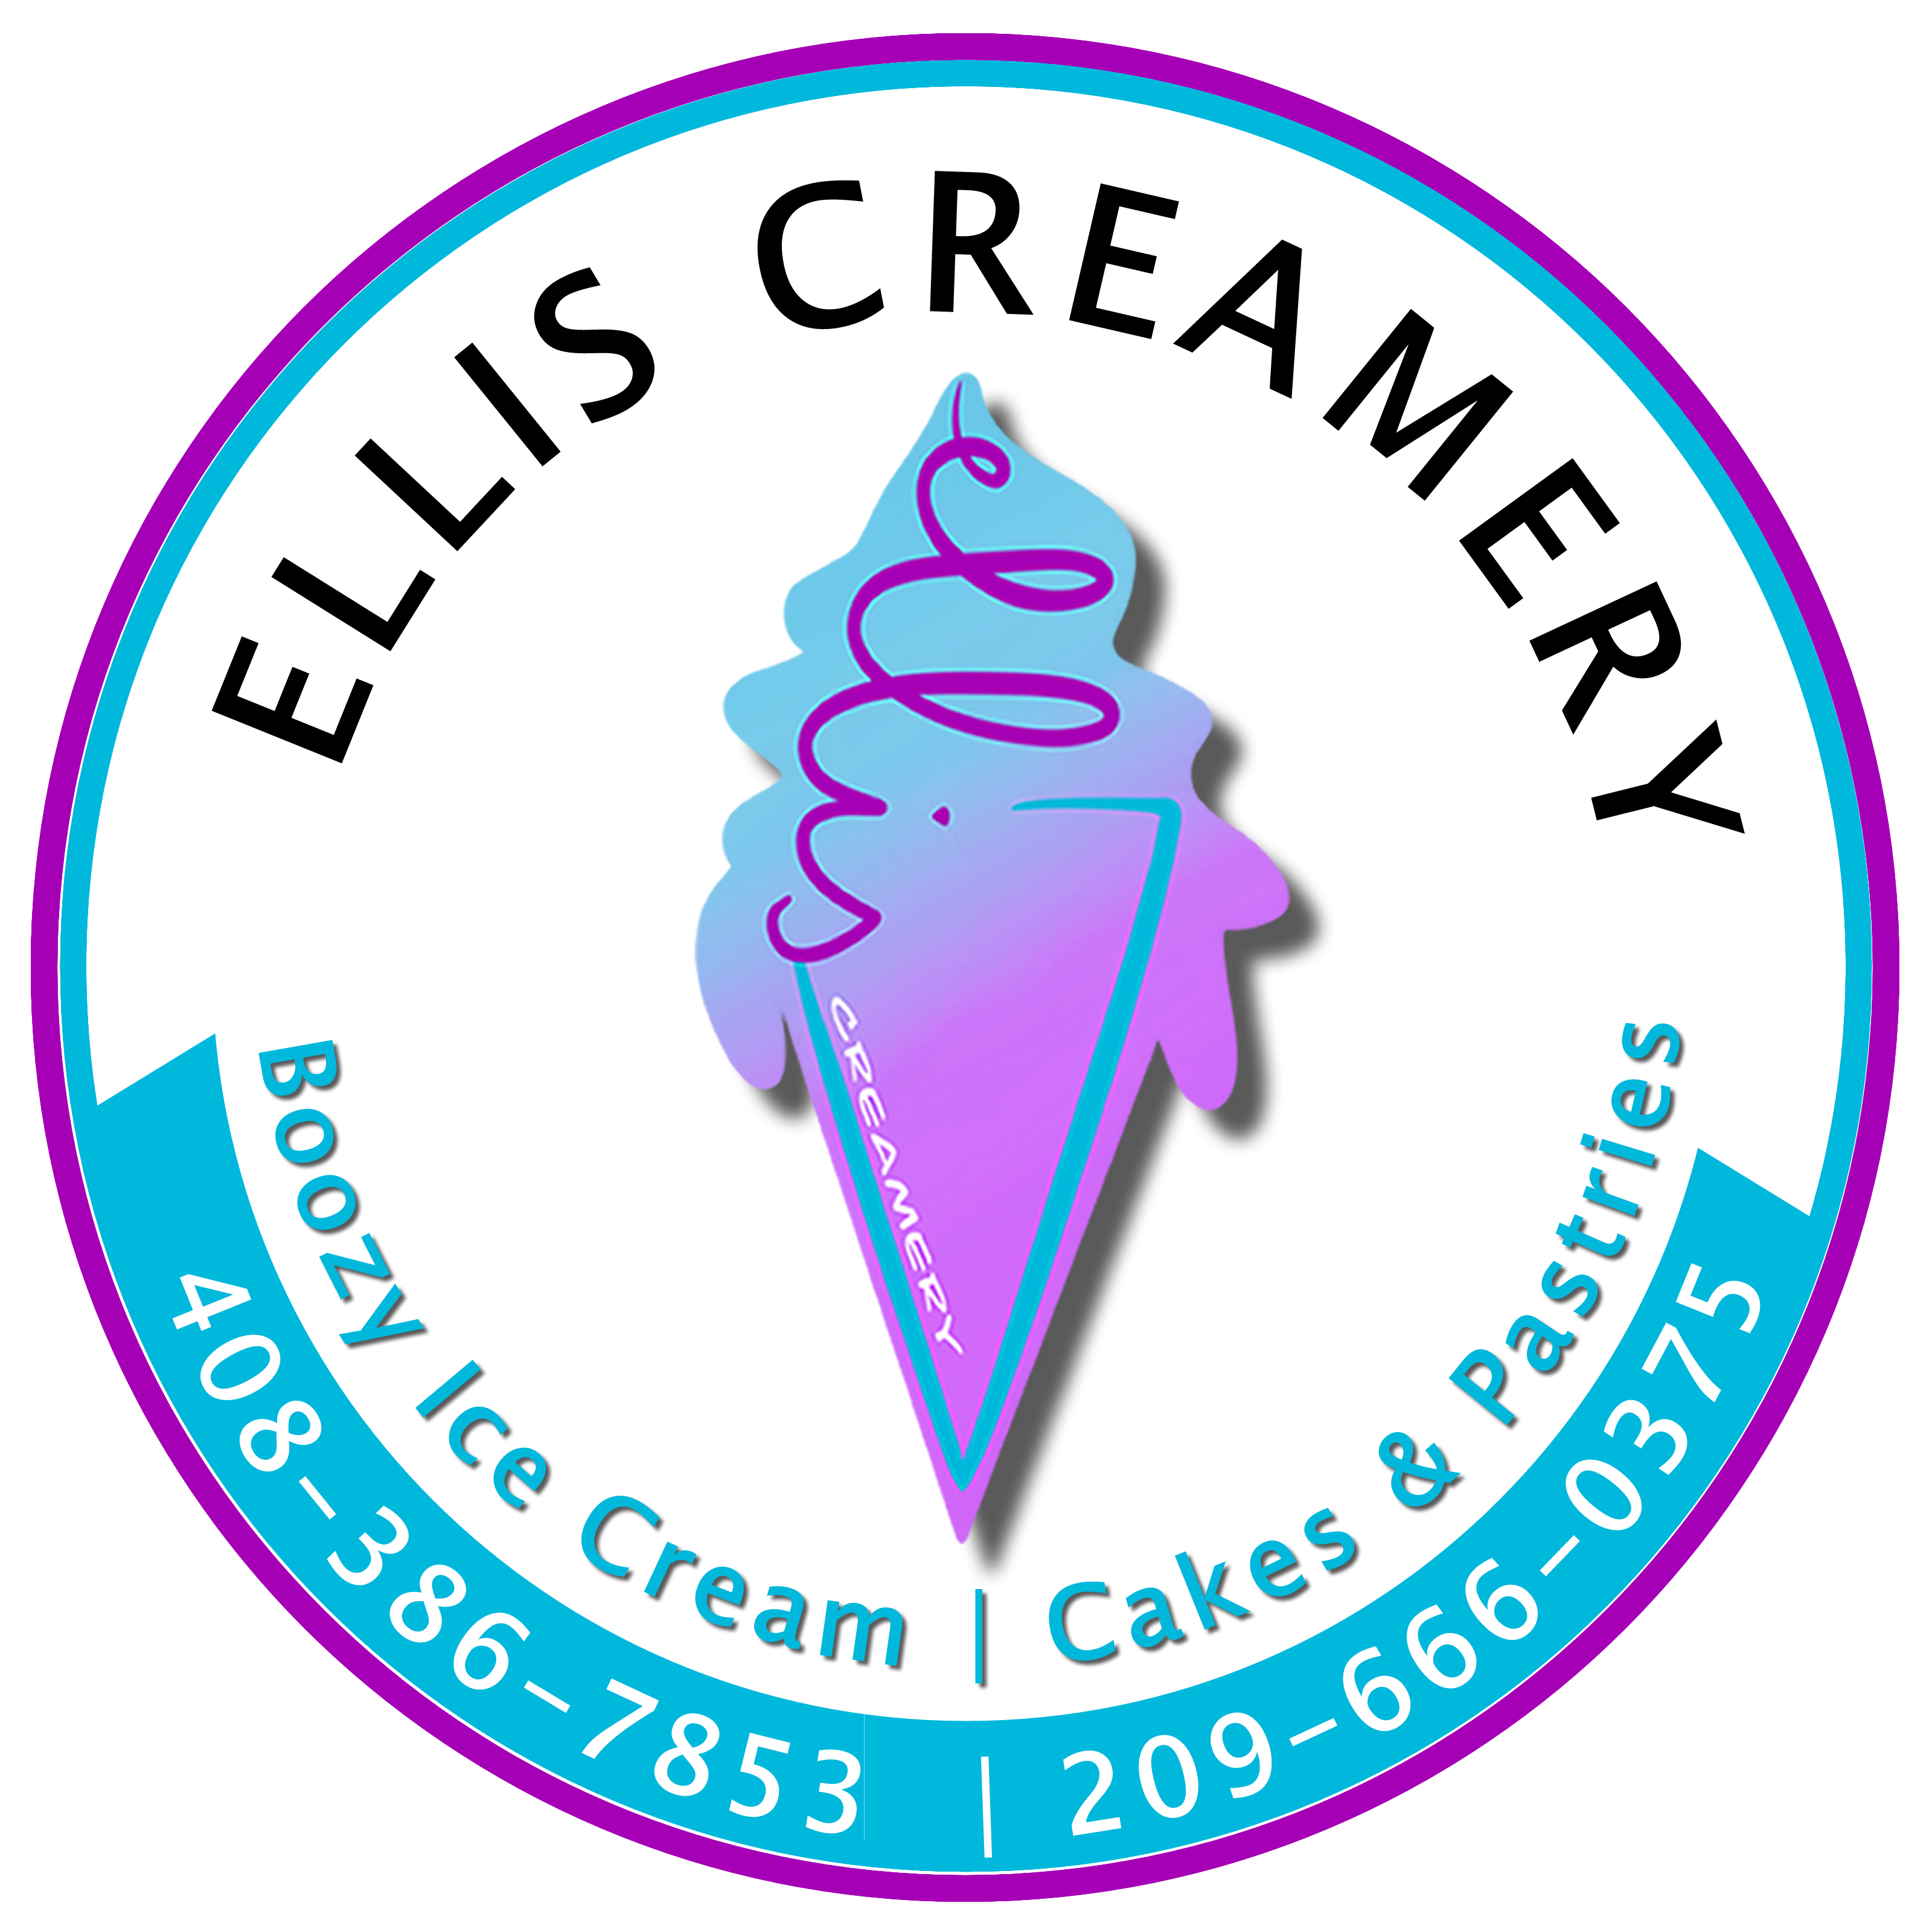 Ellis Creamery Catering